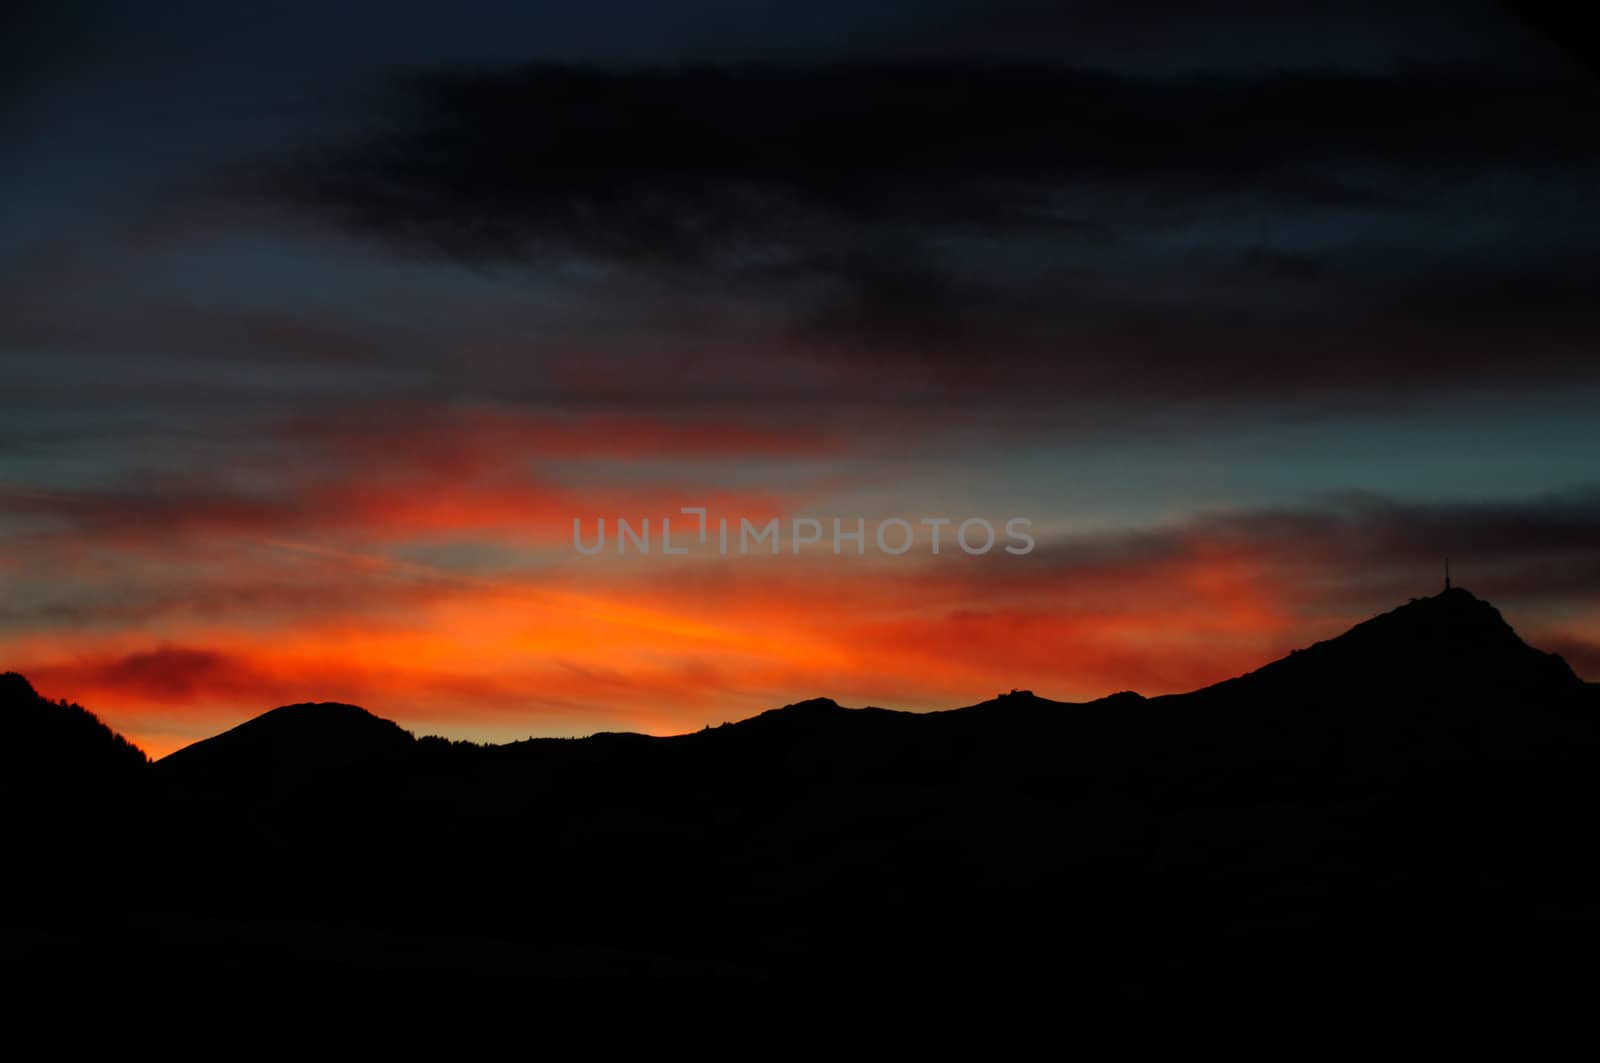 Sundown over mountain by fahrner